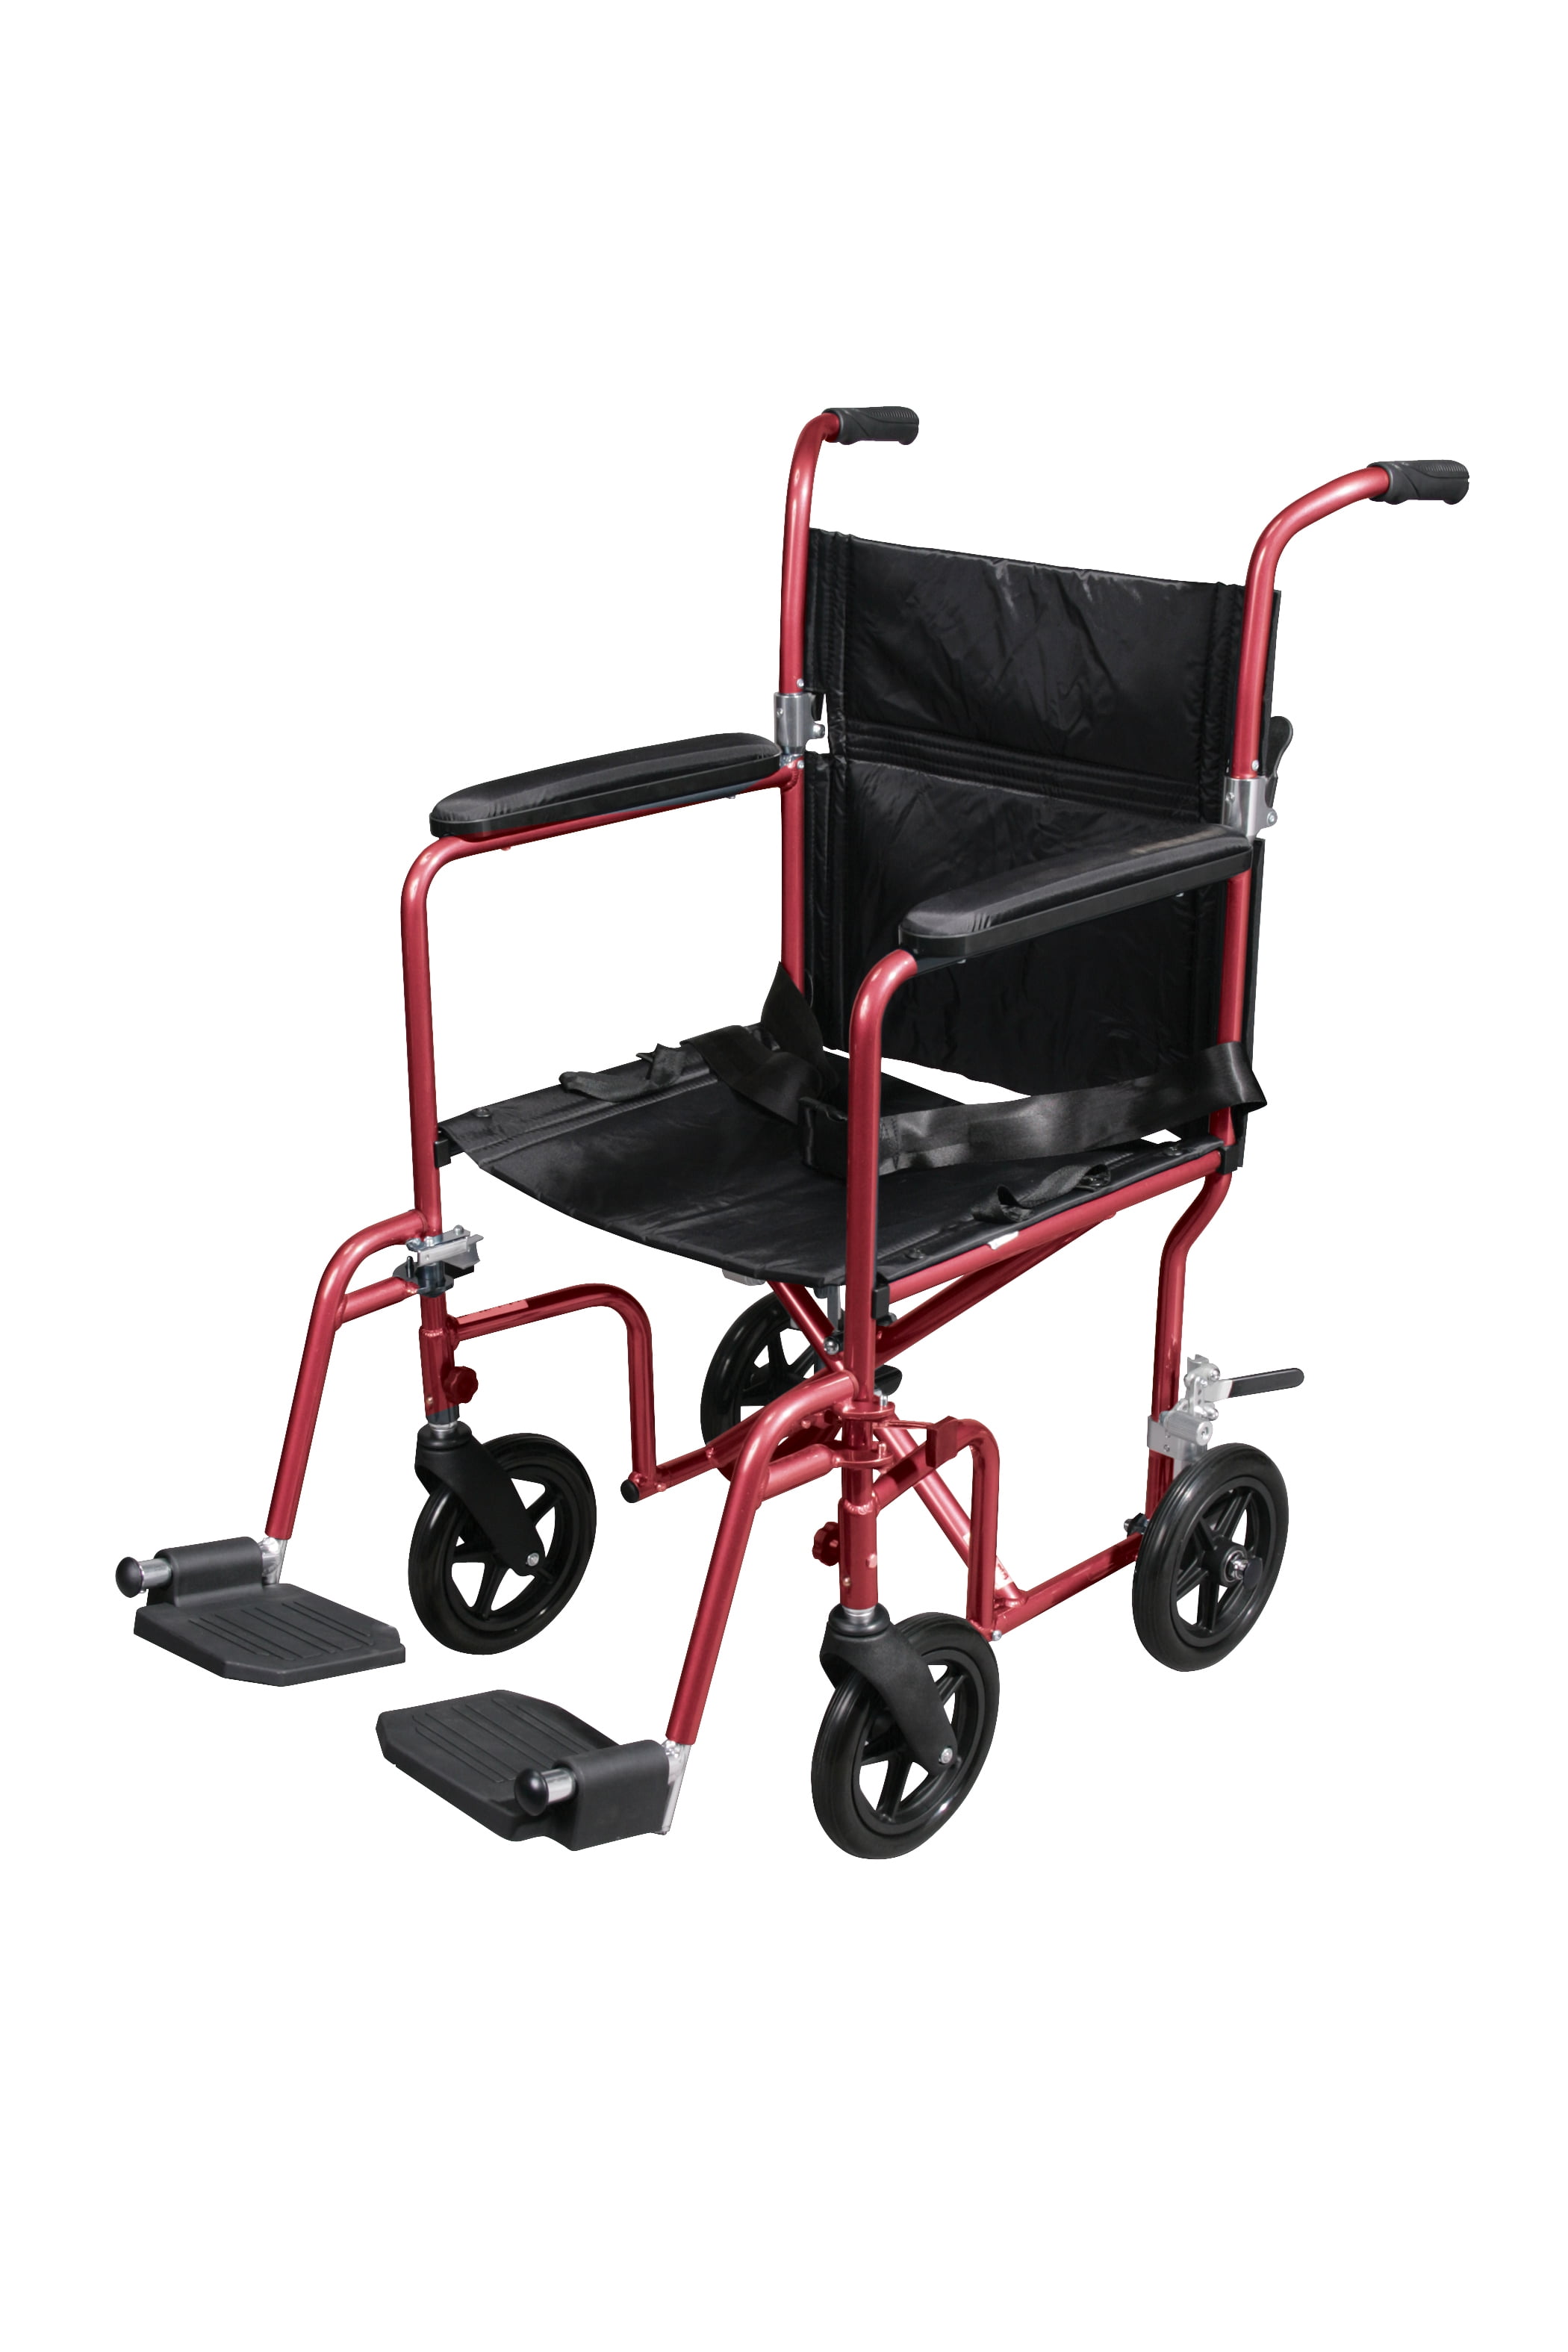 Drive Medical Flyweight Lightweight Transport Wheelchair With Removable Wheels Red Walmart Com Walmart Com